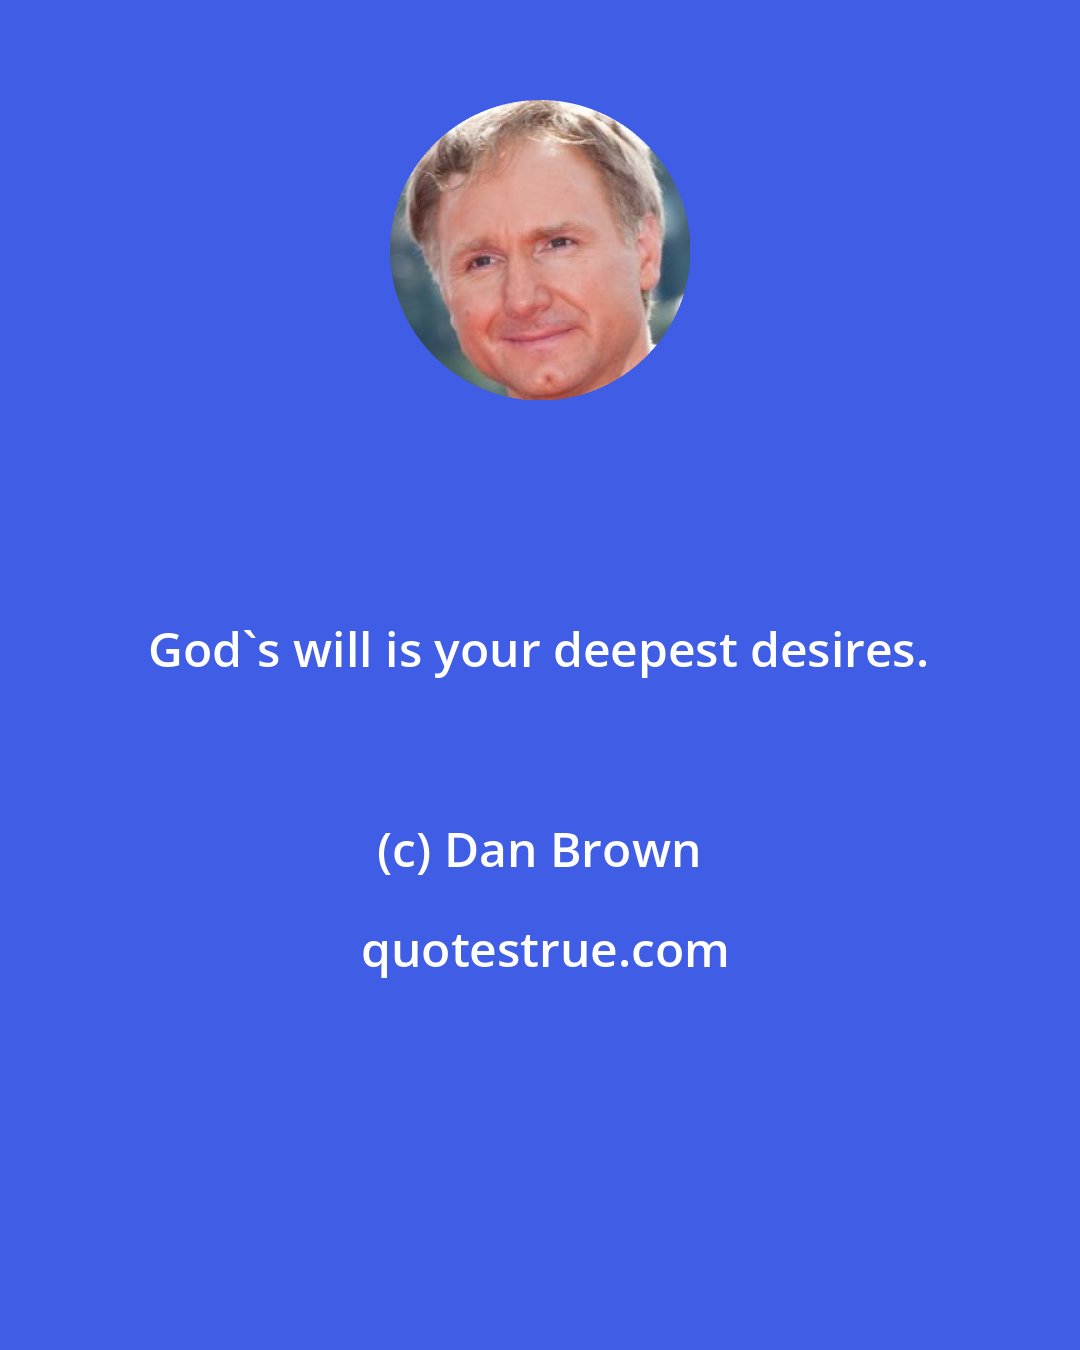 Dan Brown: God's will is your deepest desires.